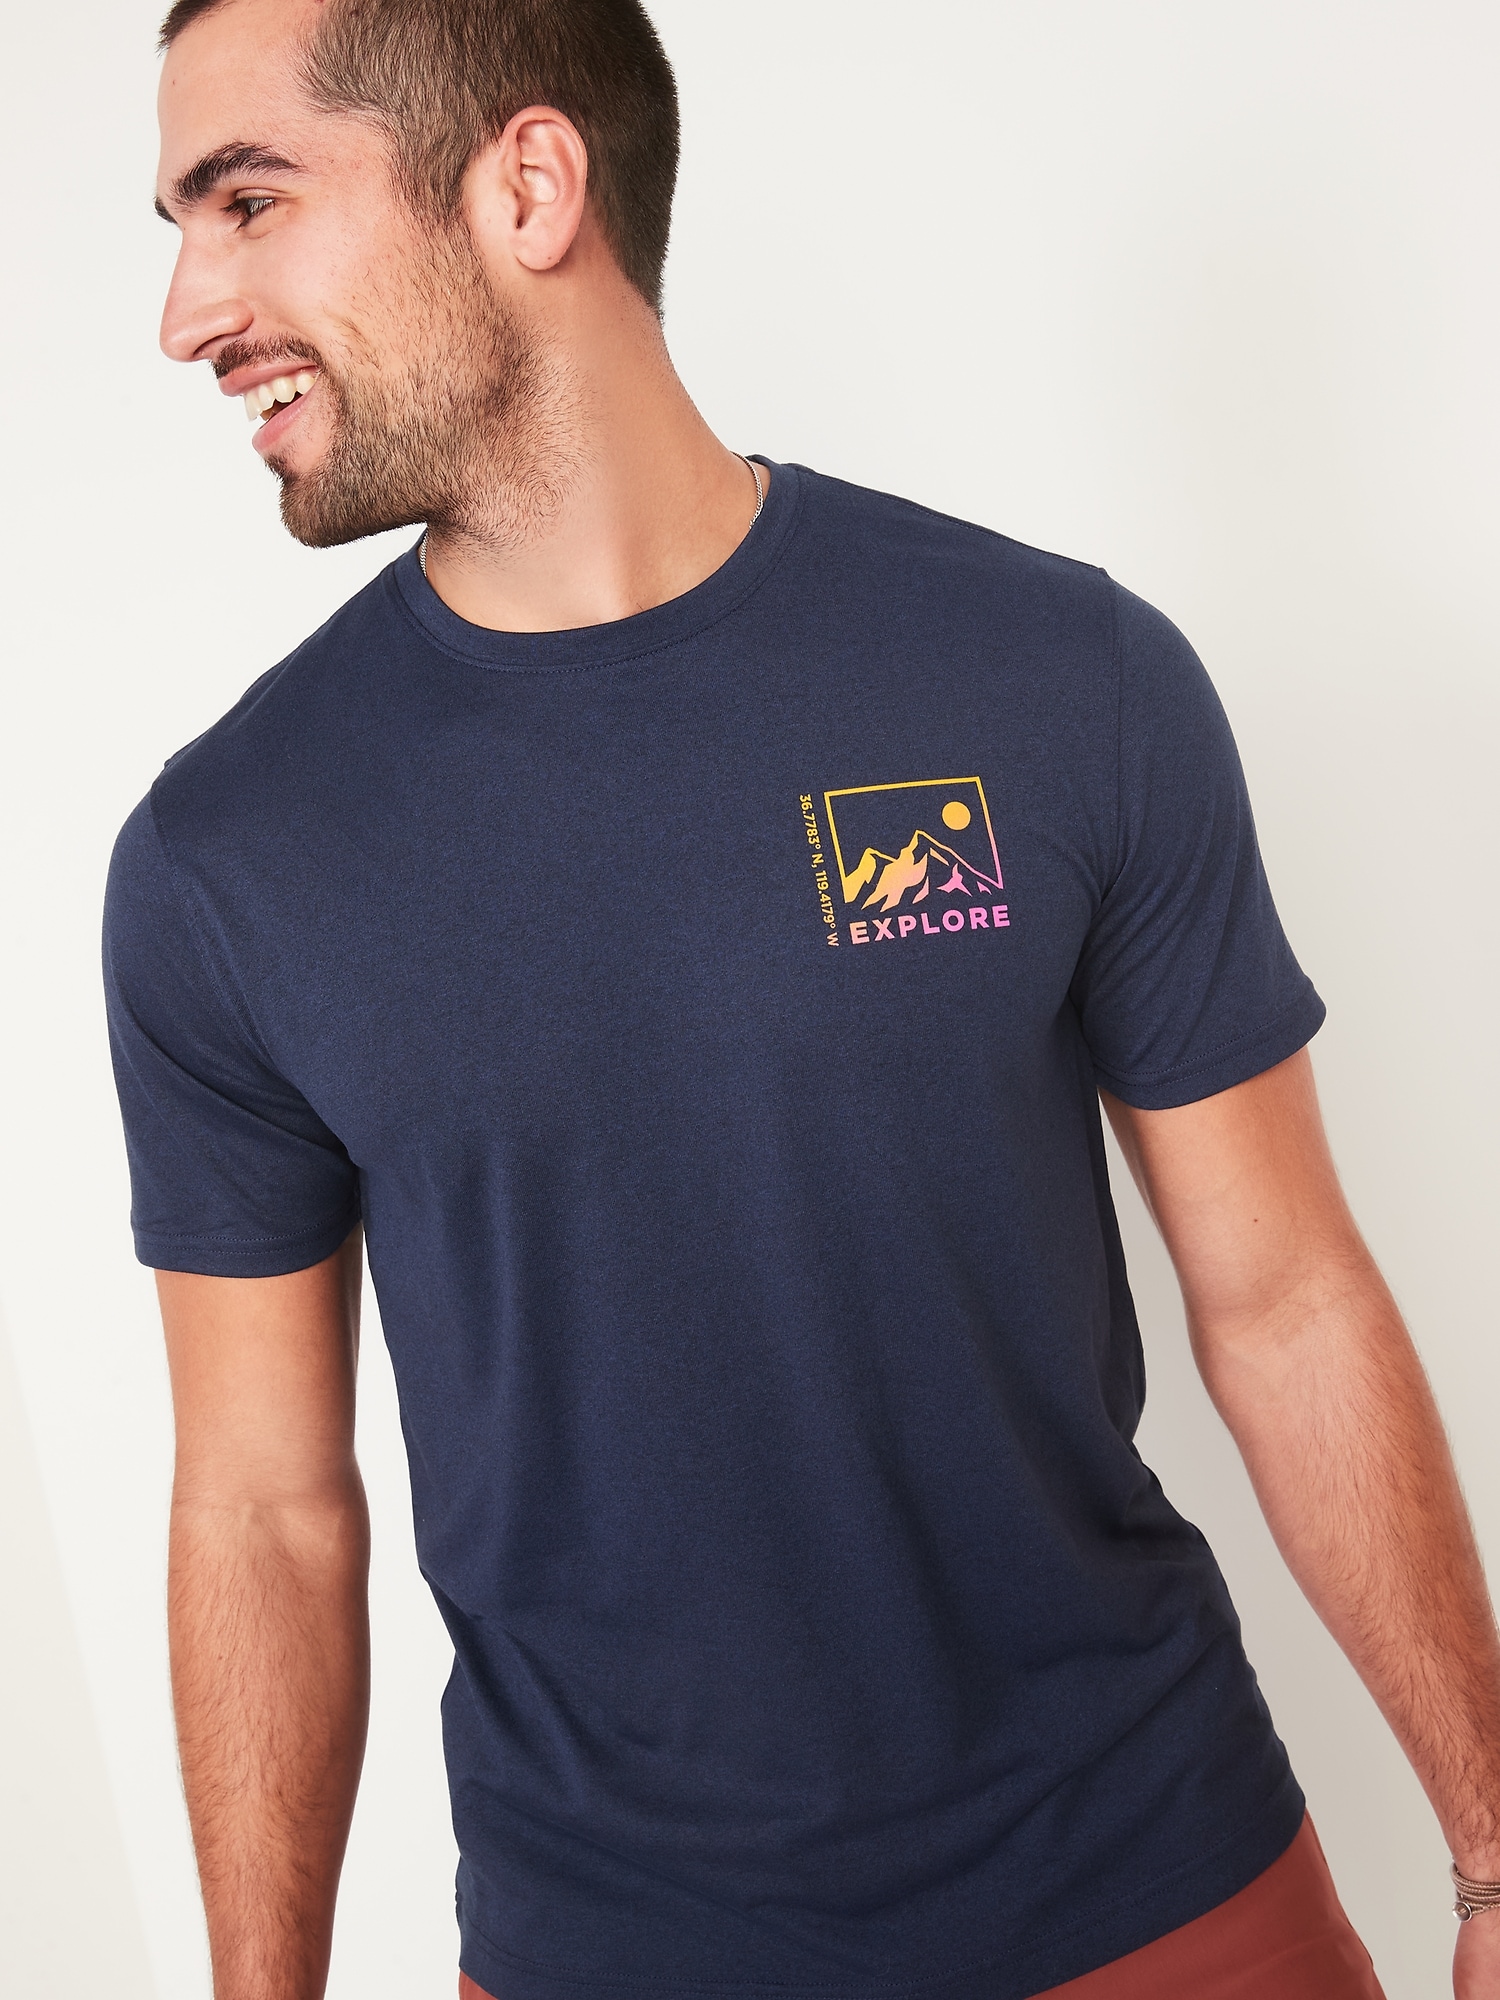 Go-Fresh Odor-Control Performance T-Shirt for Men